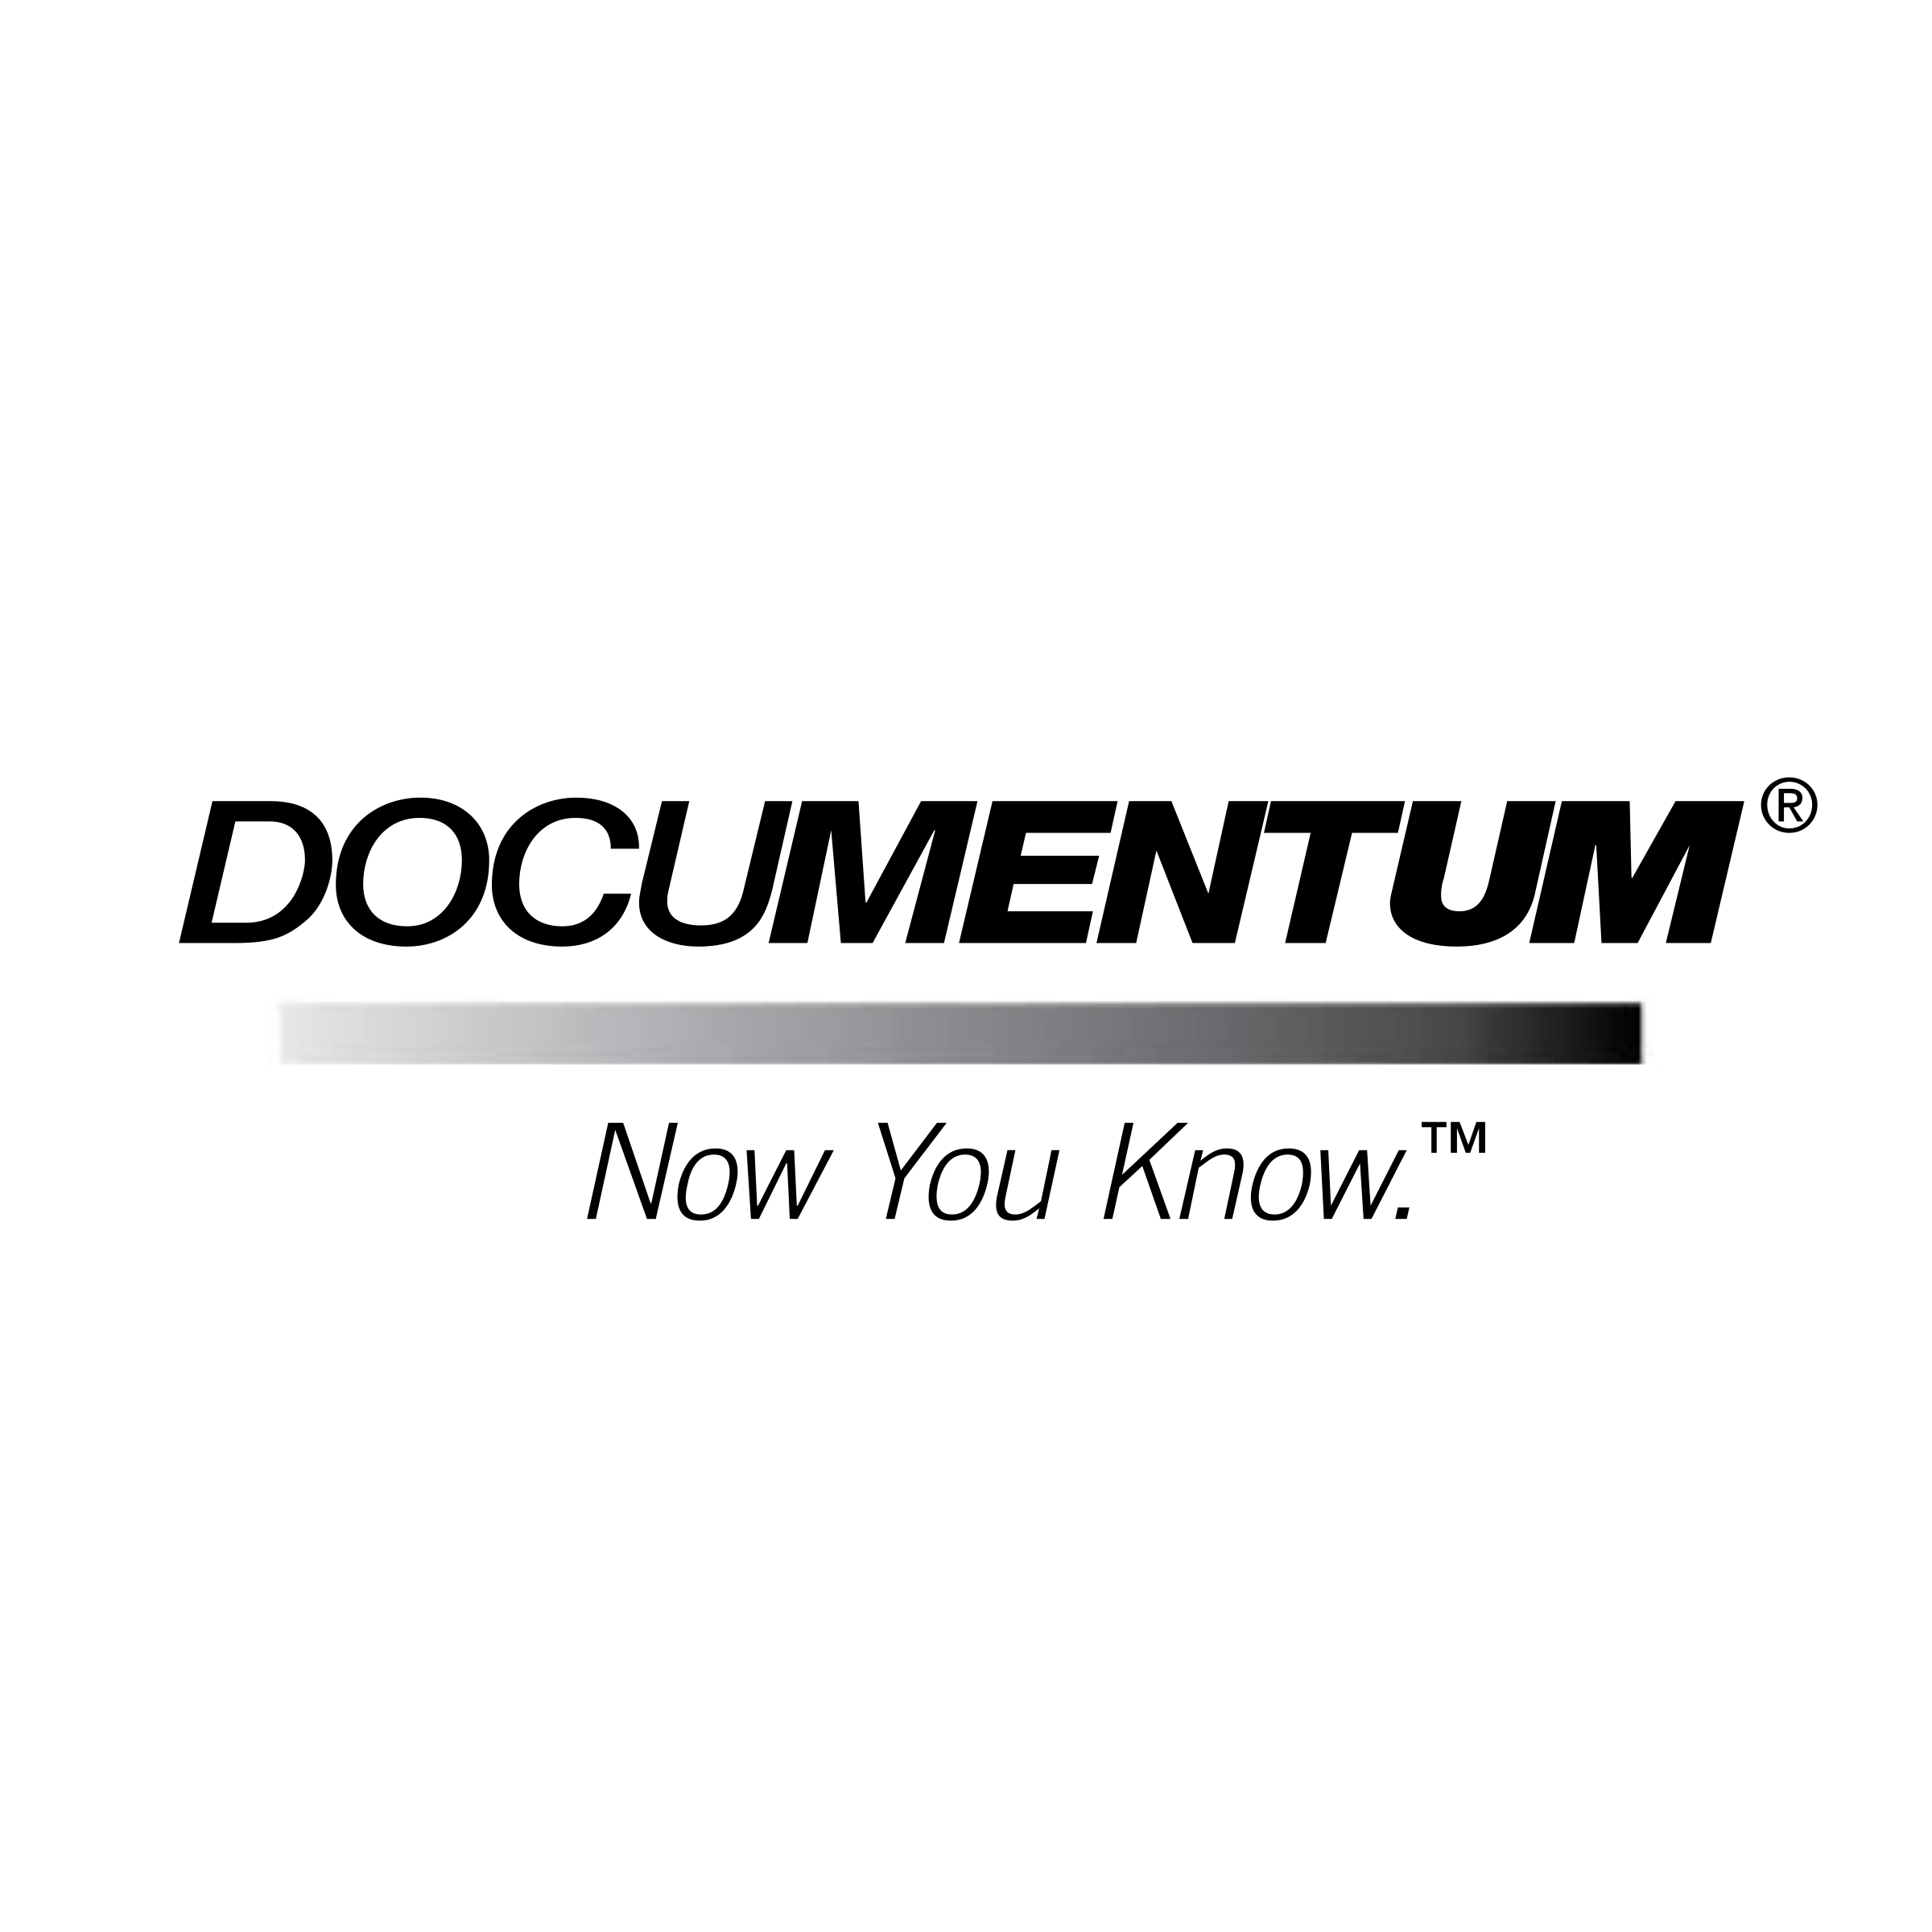 Documentum Logo - Documentum Logo PNG Transparent & SVG Vector - Freebie Supply